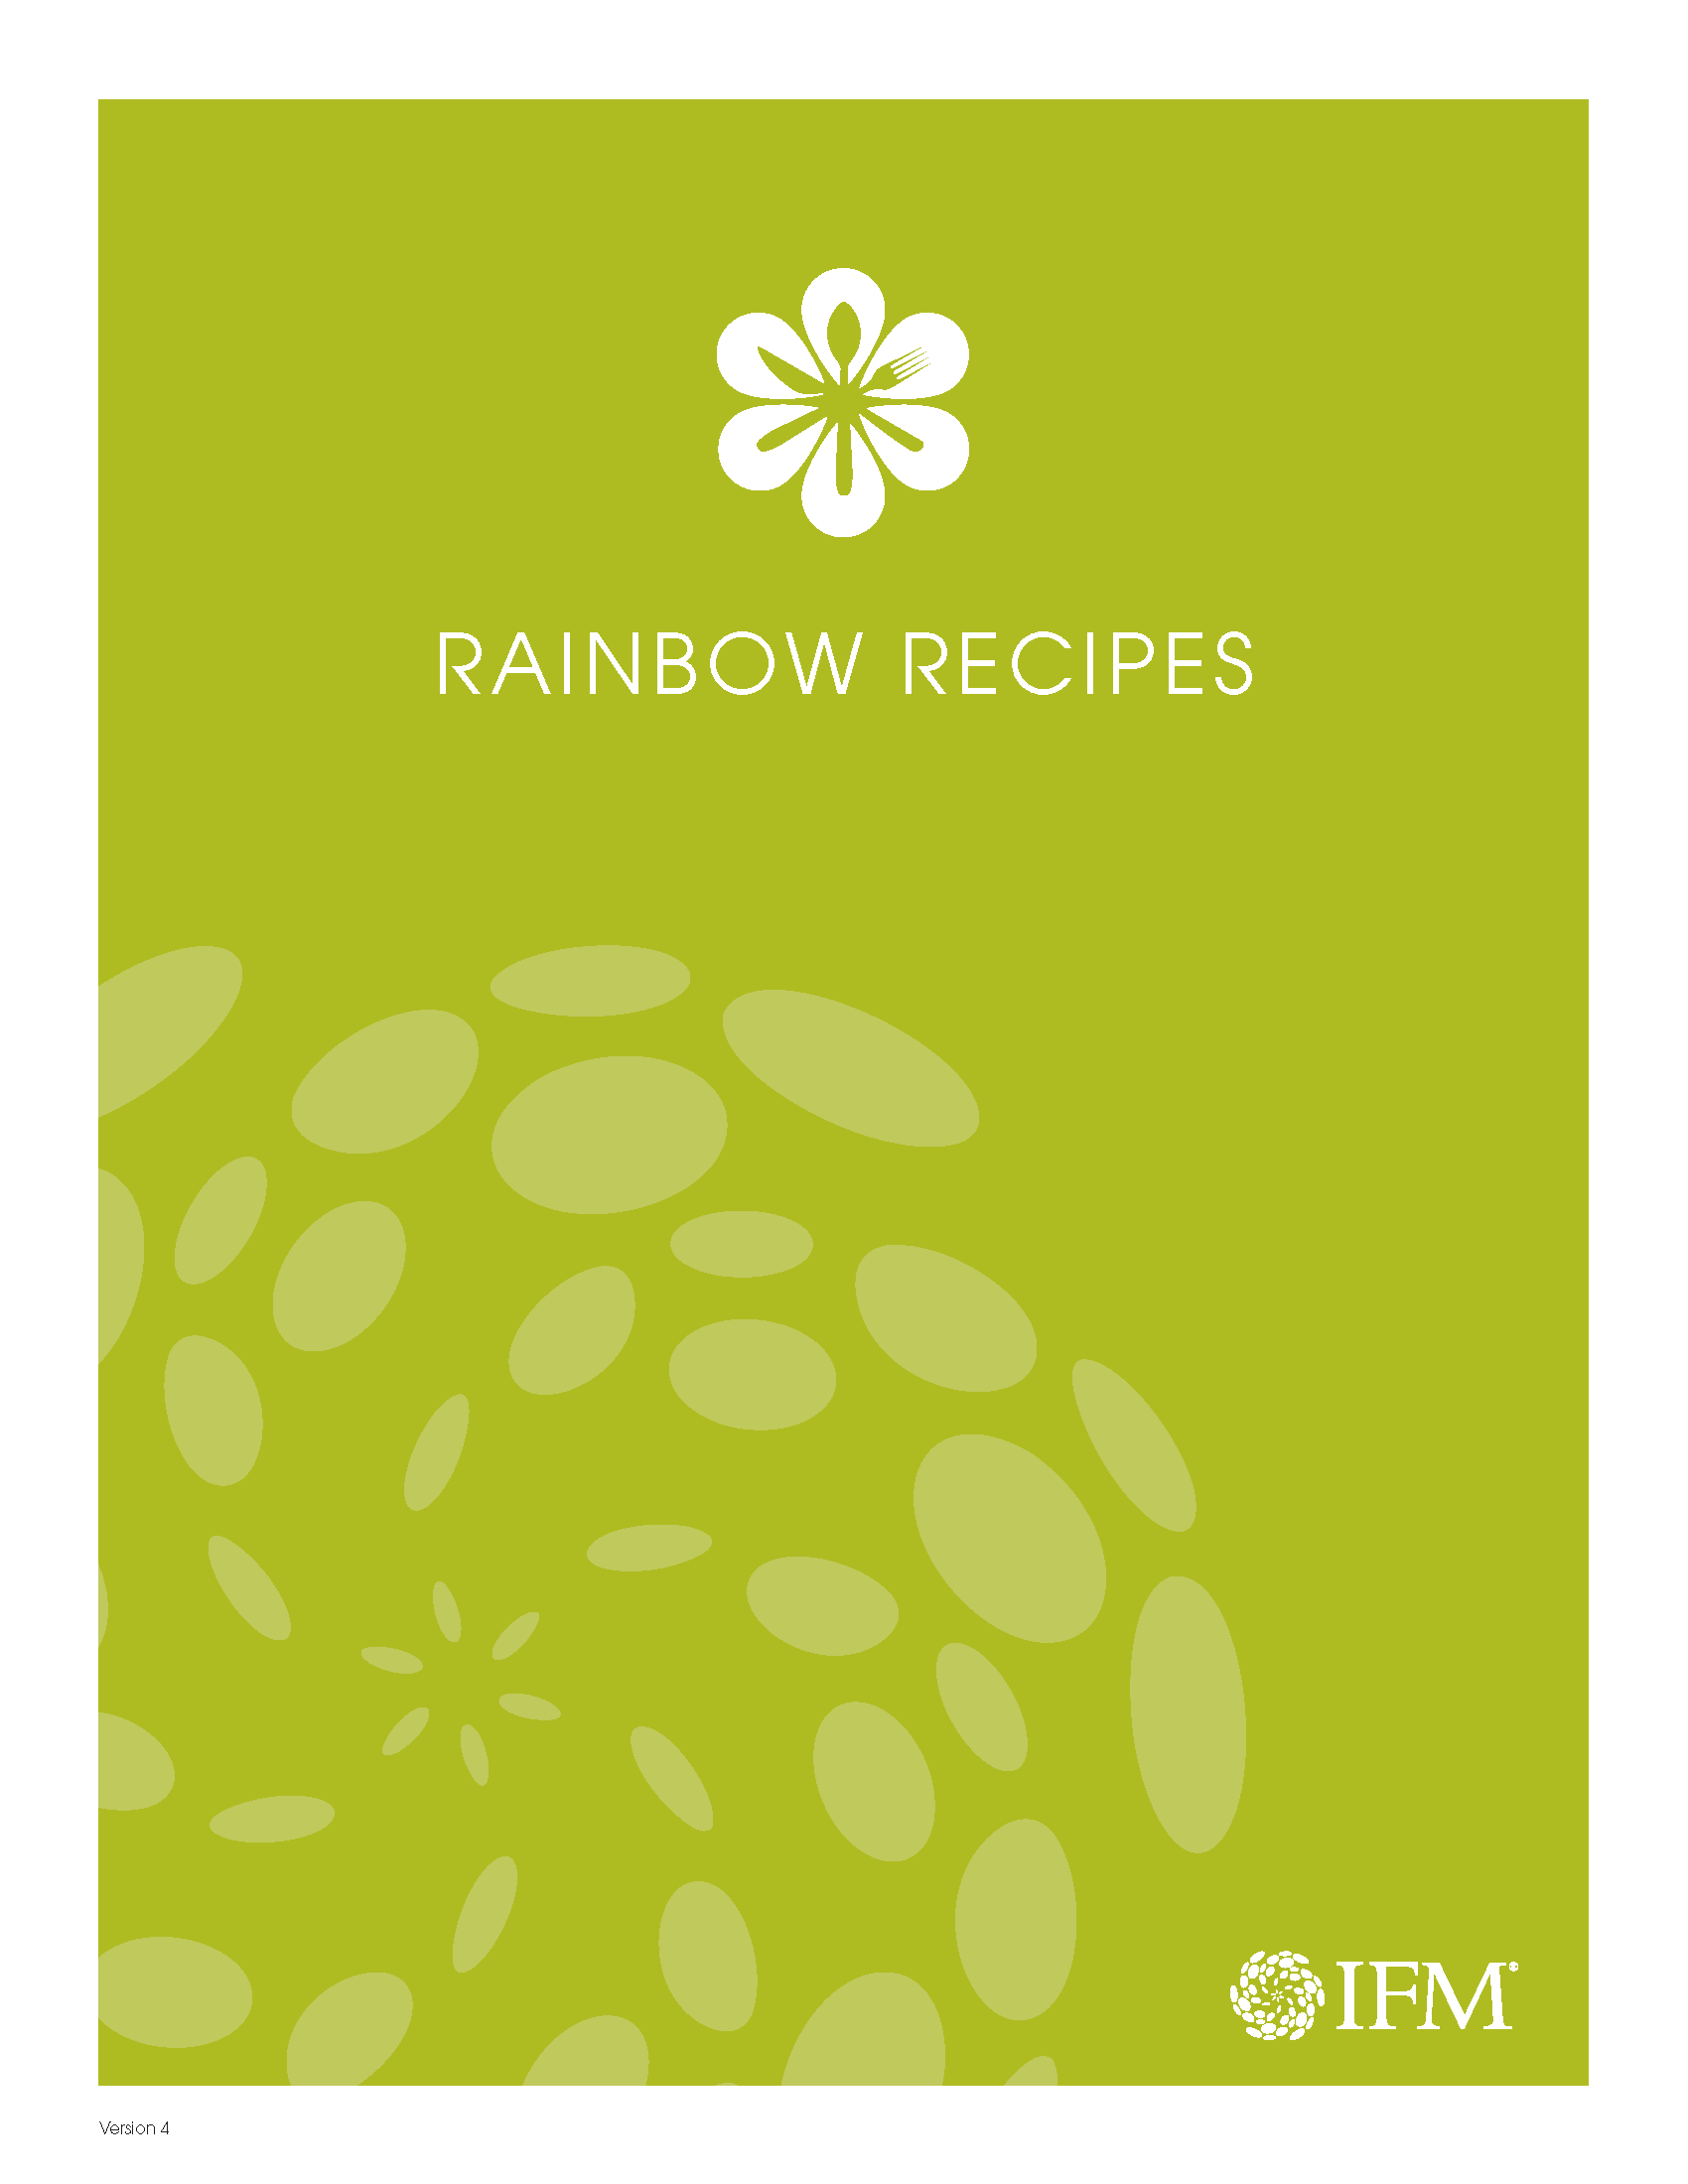 Phytonutrient Spectrum - Rainbow Recipes_v4